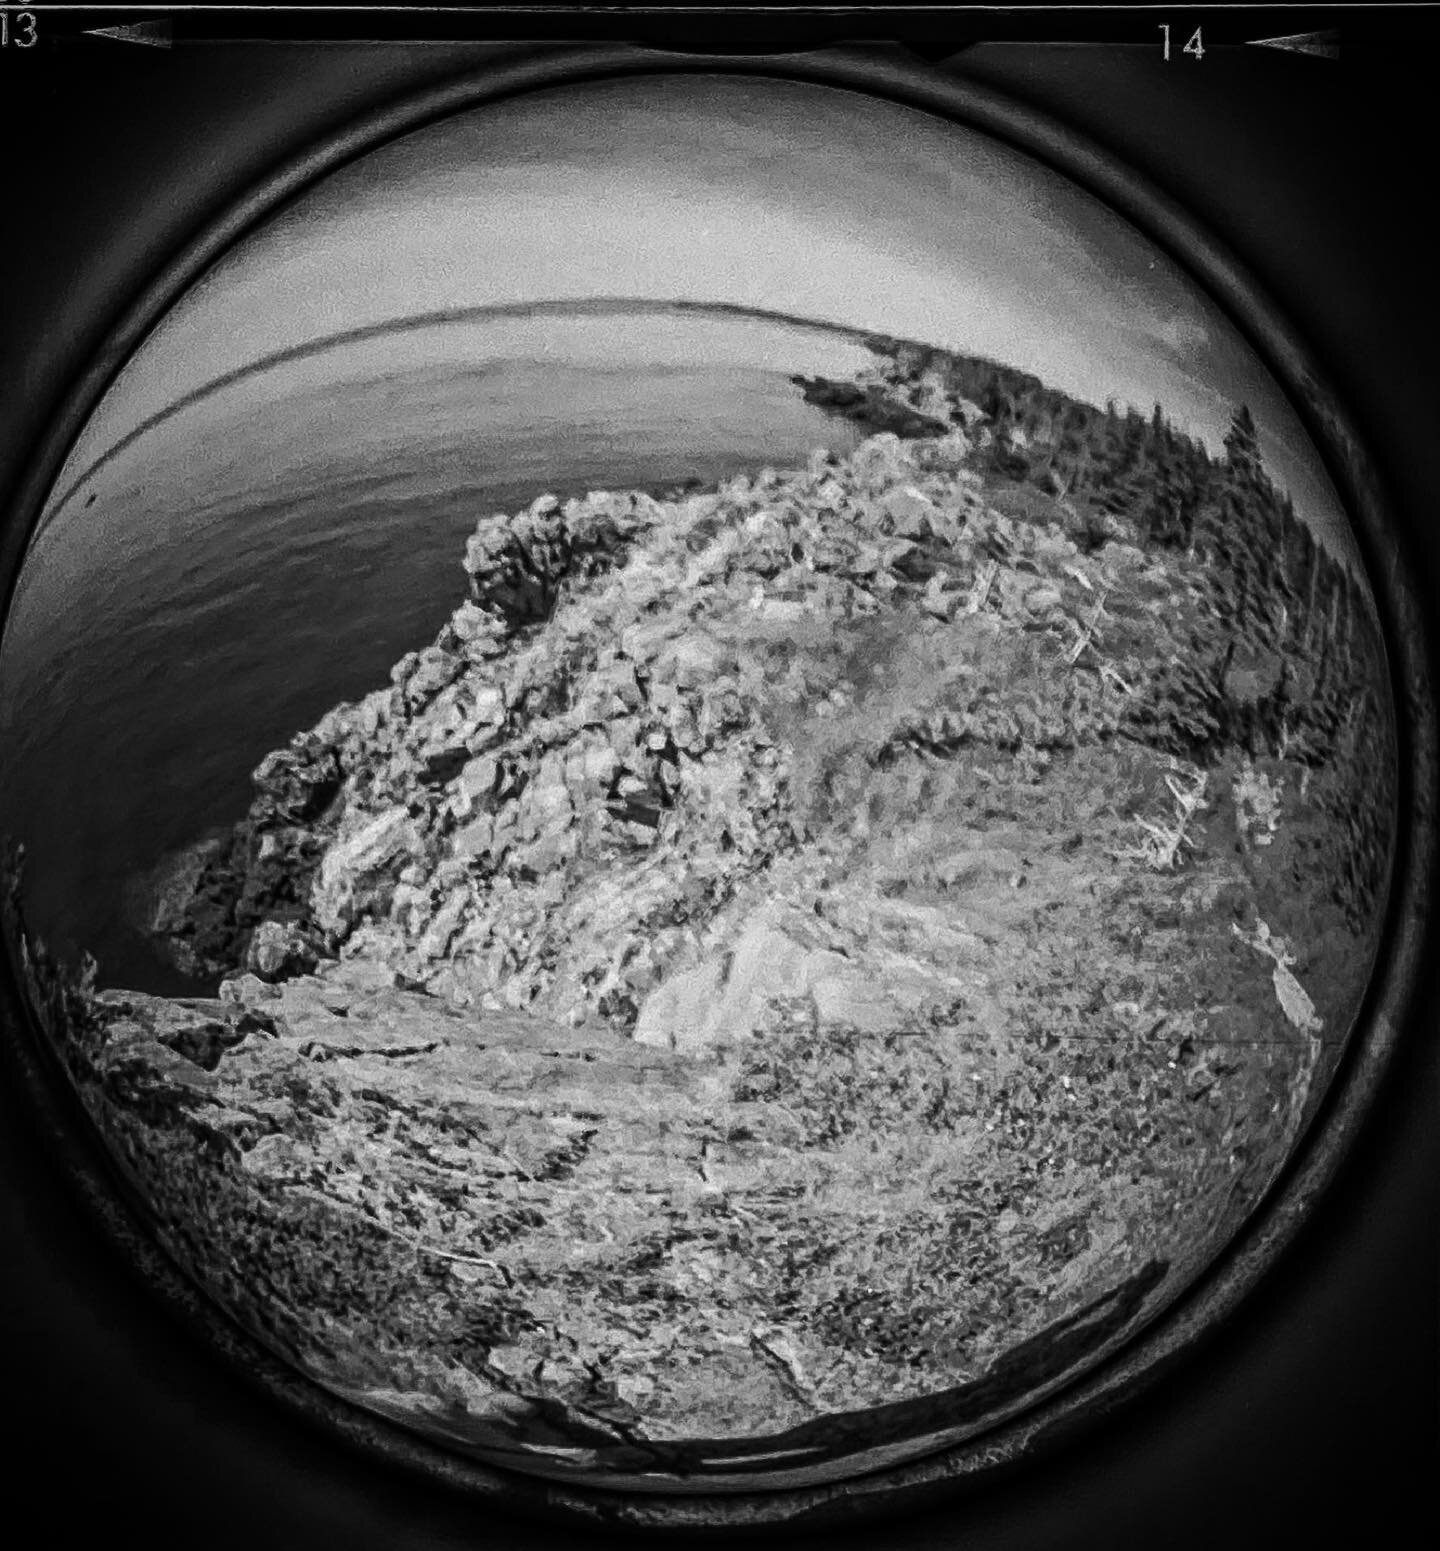 Downeast Maine seascape shot on 120 film w/ fisheye lens on analog Diana F+ camera.

#film #120film #120filmphotography #blackandwhite #blackandwhitephotography #toycam #toycamera #toycameraphotography #dianaf #dianafplus #lomo #lomography #lomografi